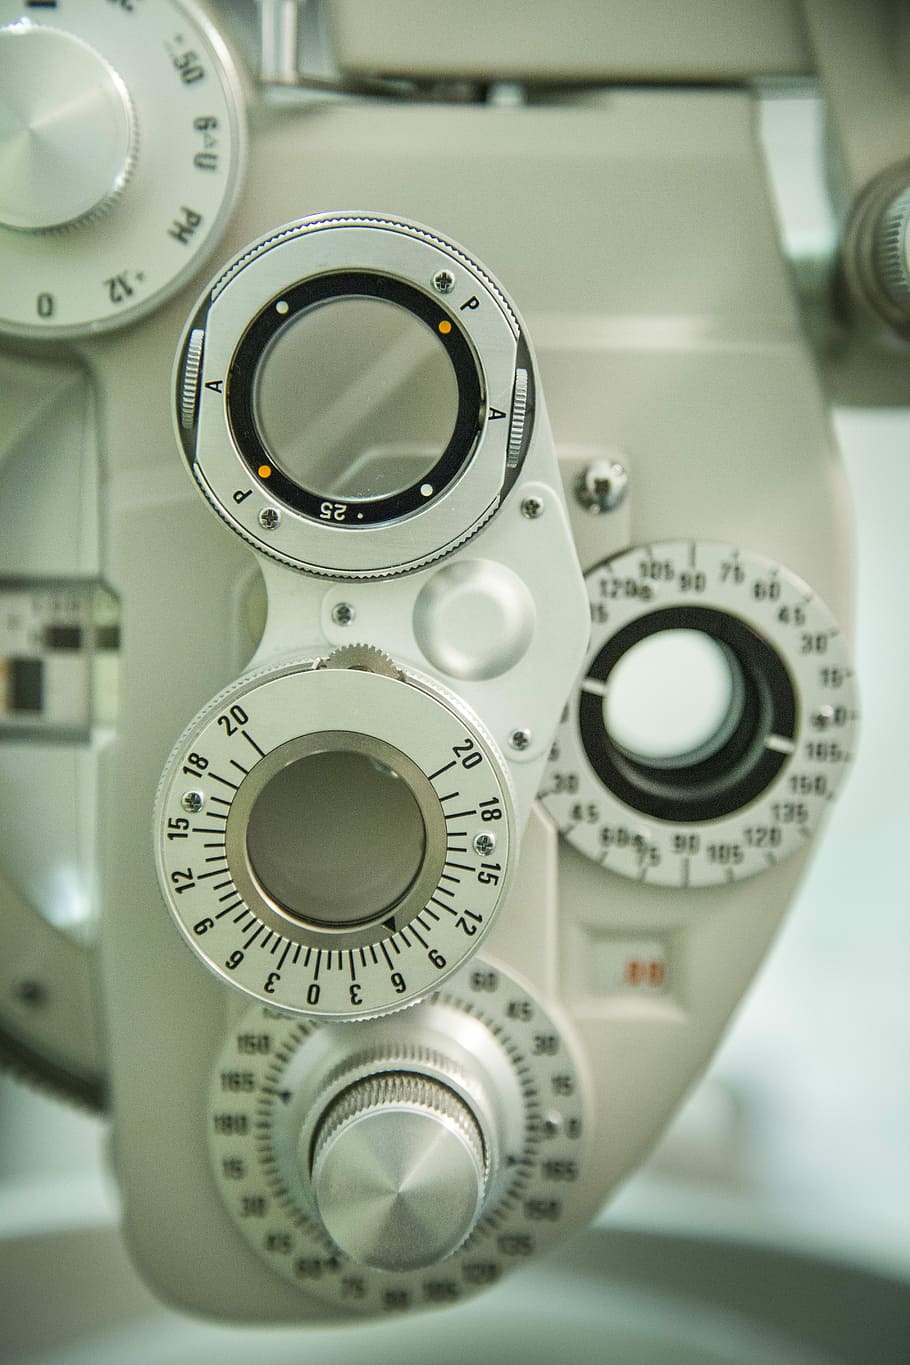 optics, optometria, refraction, healthcare and medicine, eye test equipment